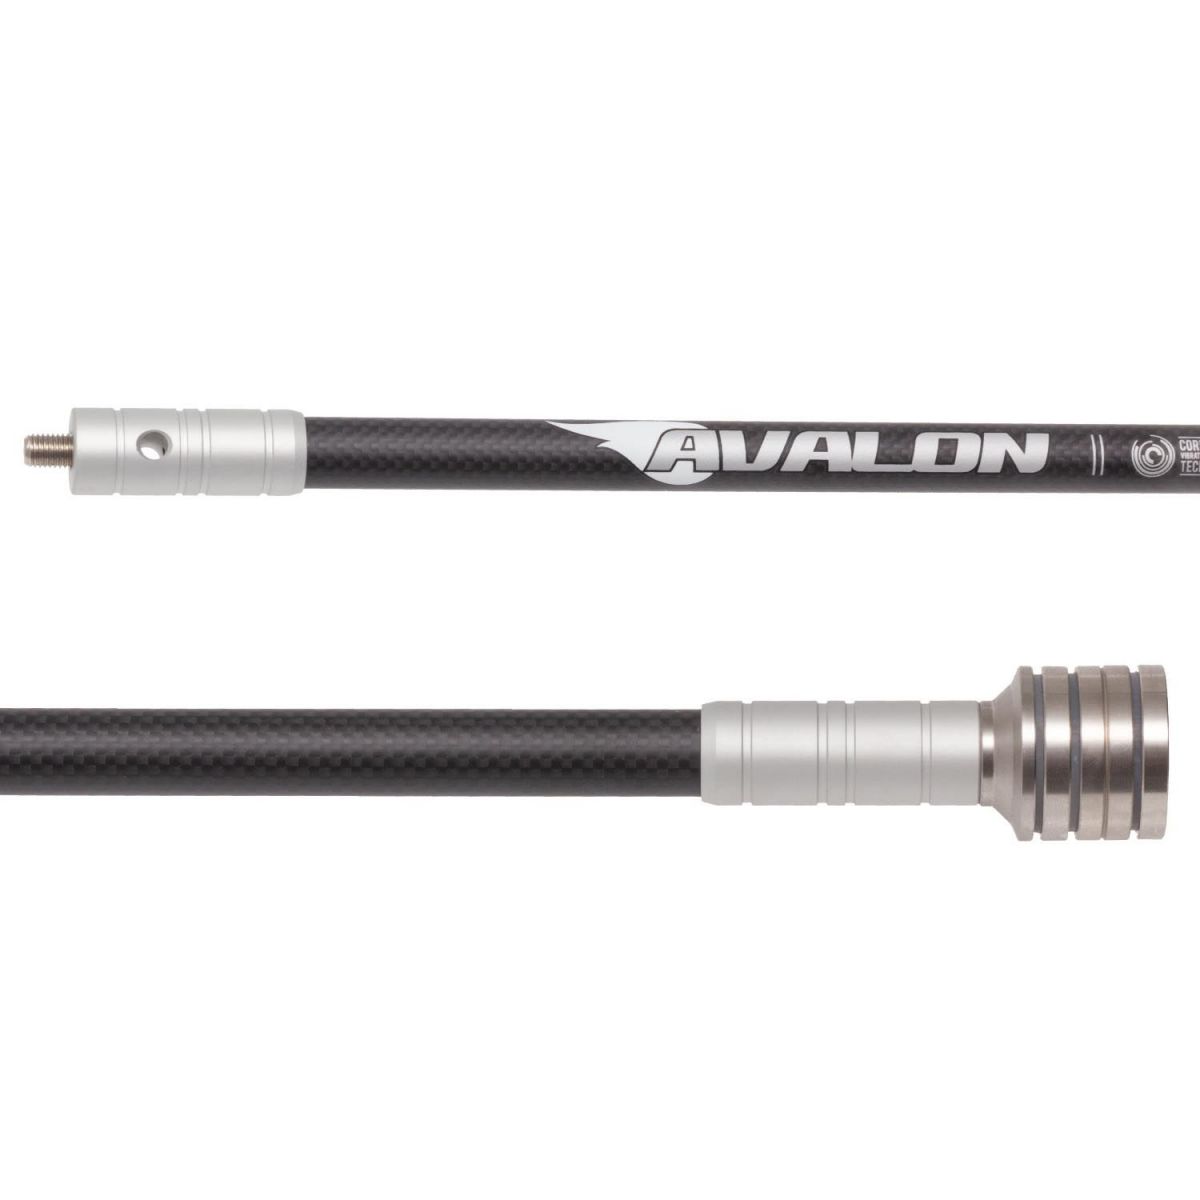 Avalon Stabilizer Tec X 16 mm "Inflexible" Long